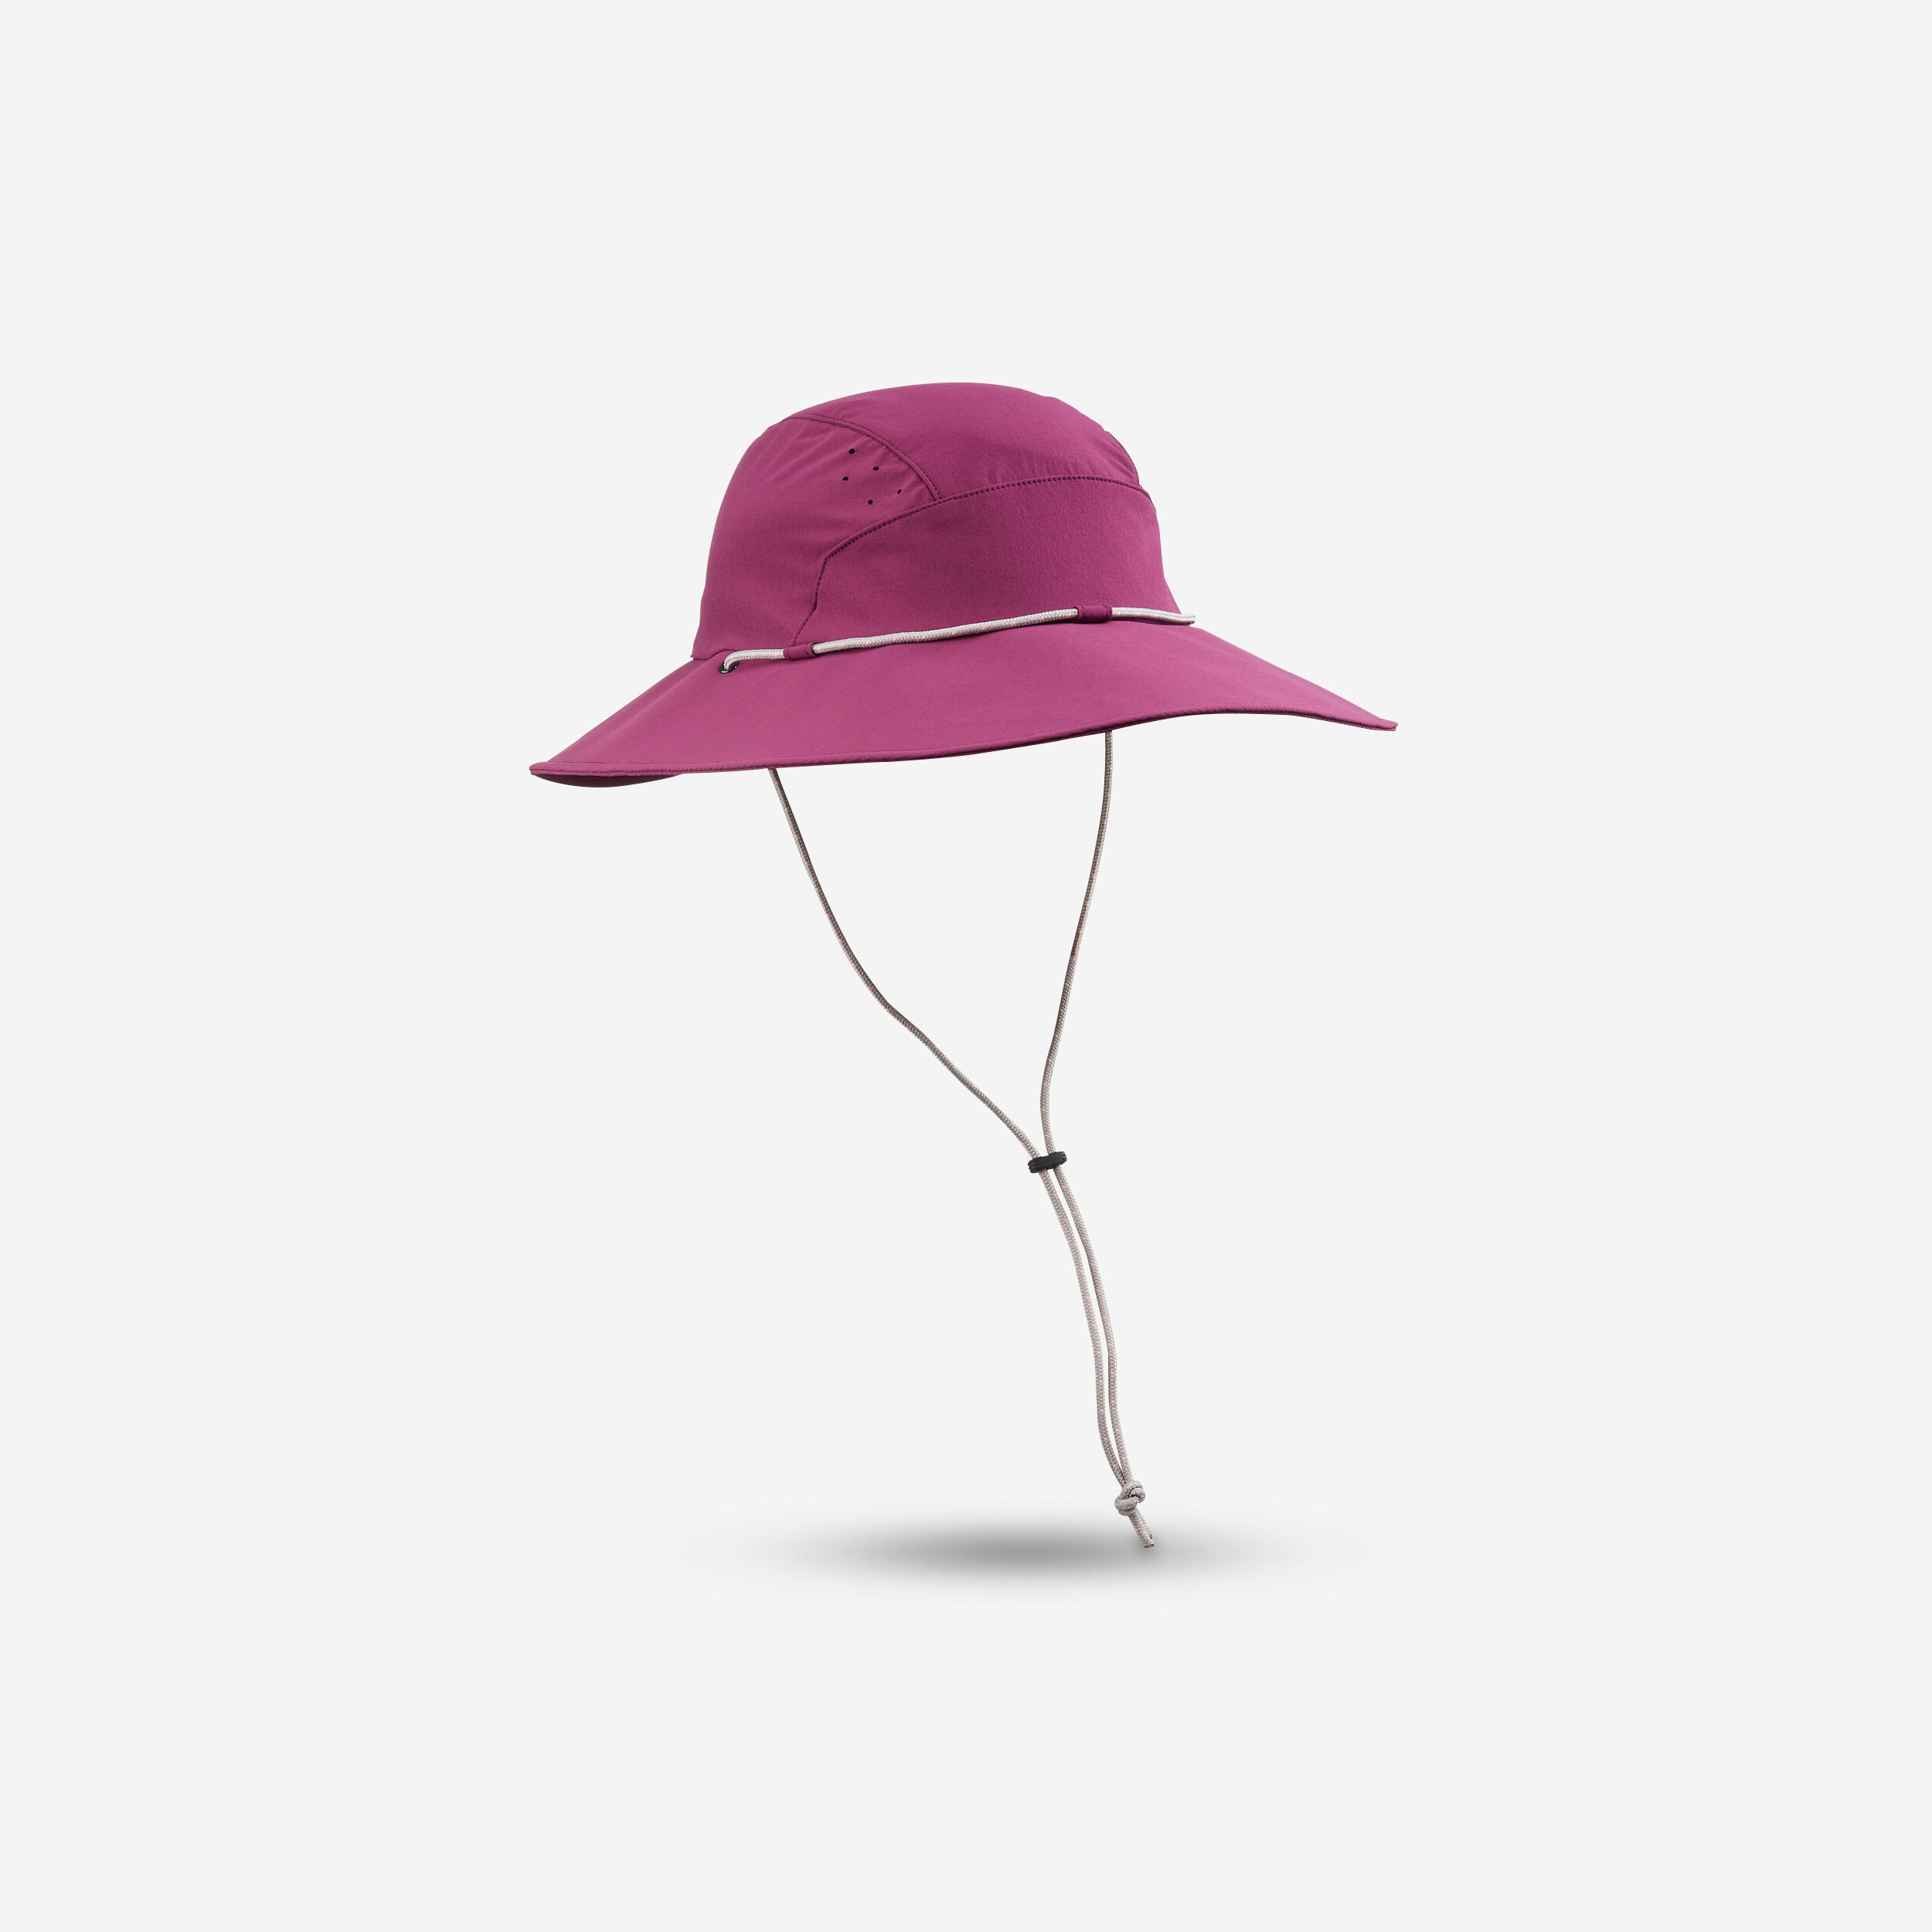 Trek 500 Mountain Trekking Anti-UV Hat Purple - Women's - Bright plum,  Carbon grey - Forclaz - Decathlon